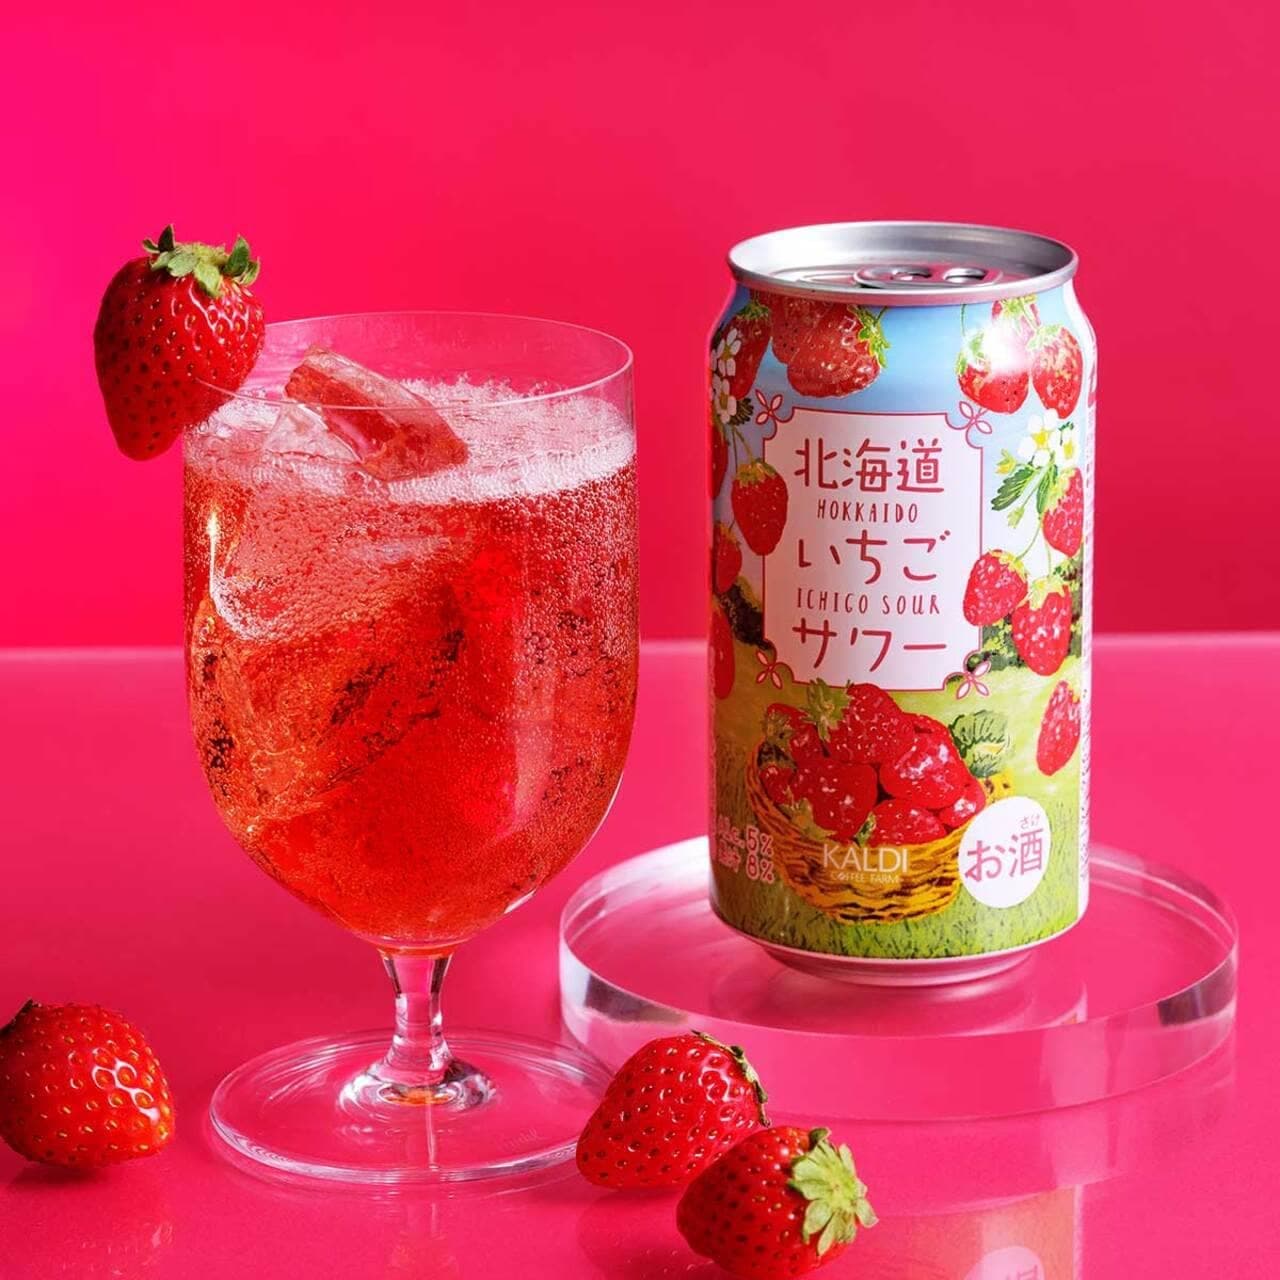 KALDI's "Original Hokkaido Strawberry Sour